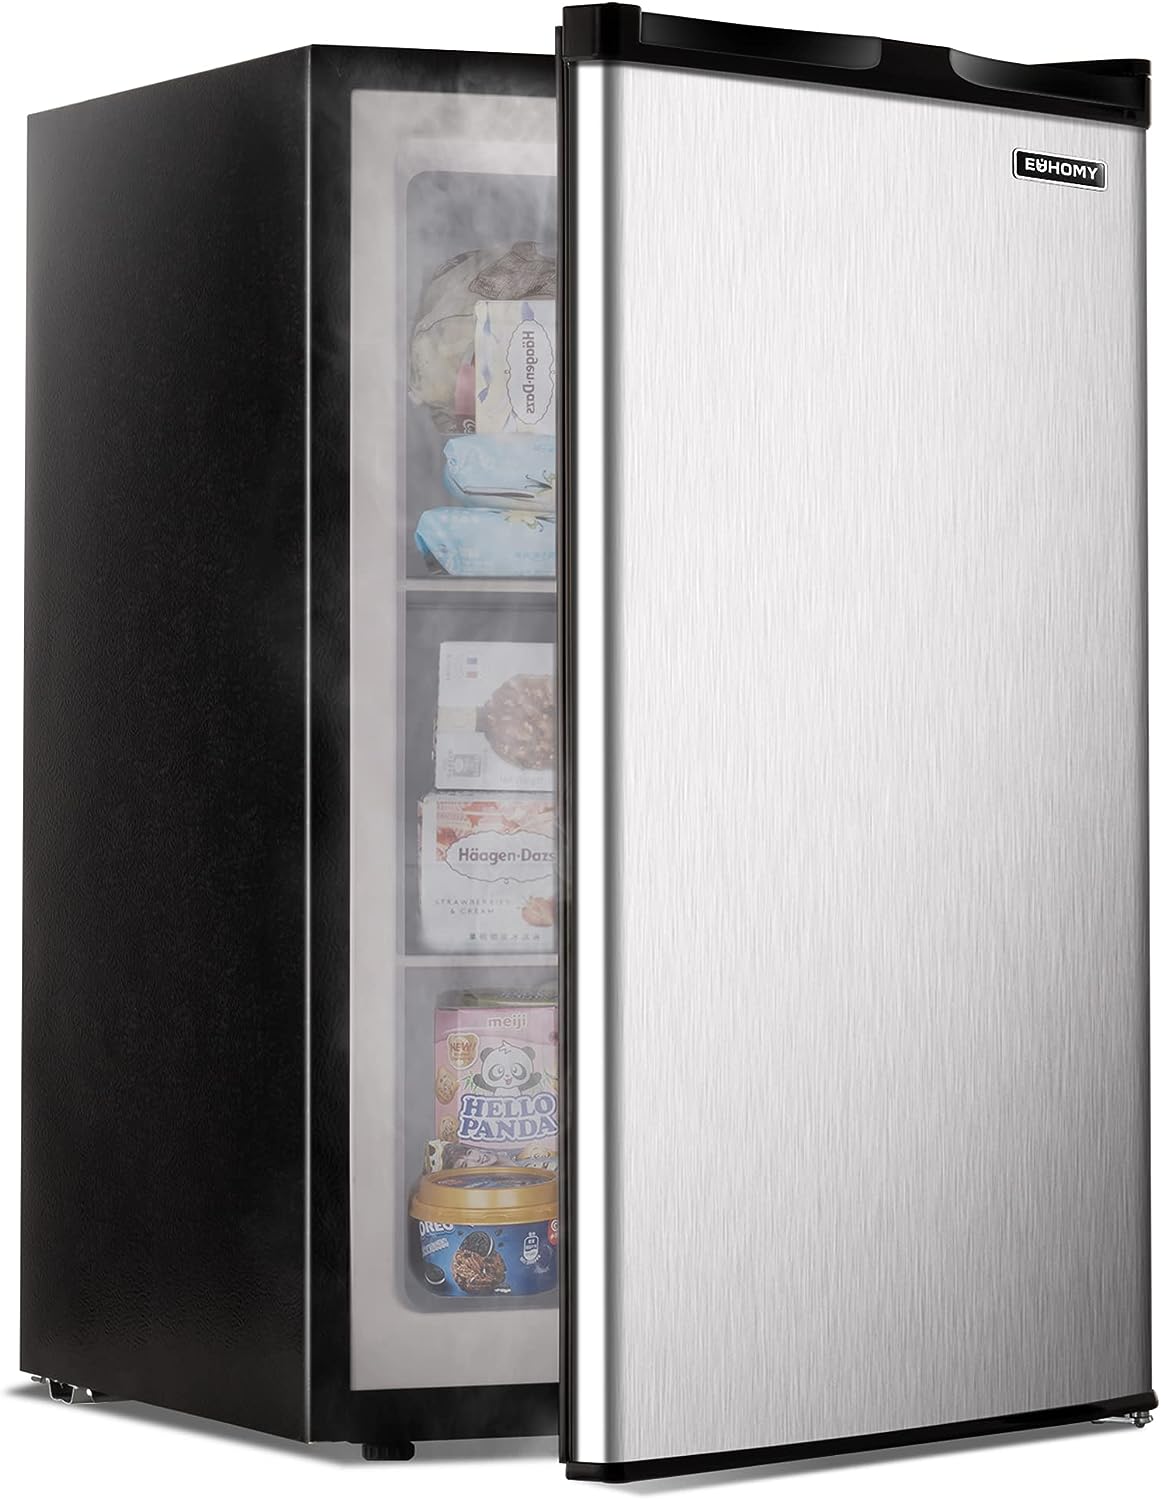 EUHOMY Upright freezer, 3.0 Cubic Feet, Single Door [...]